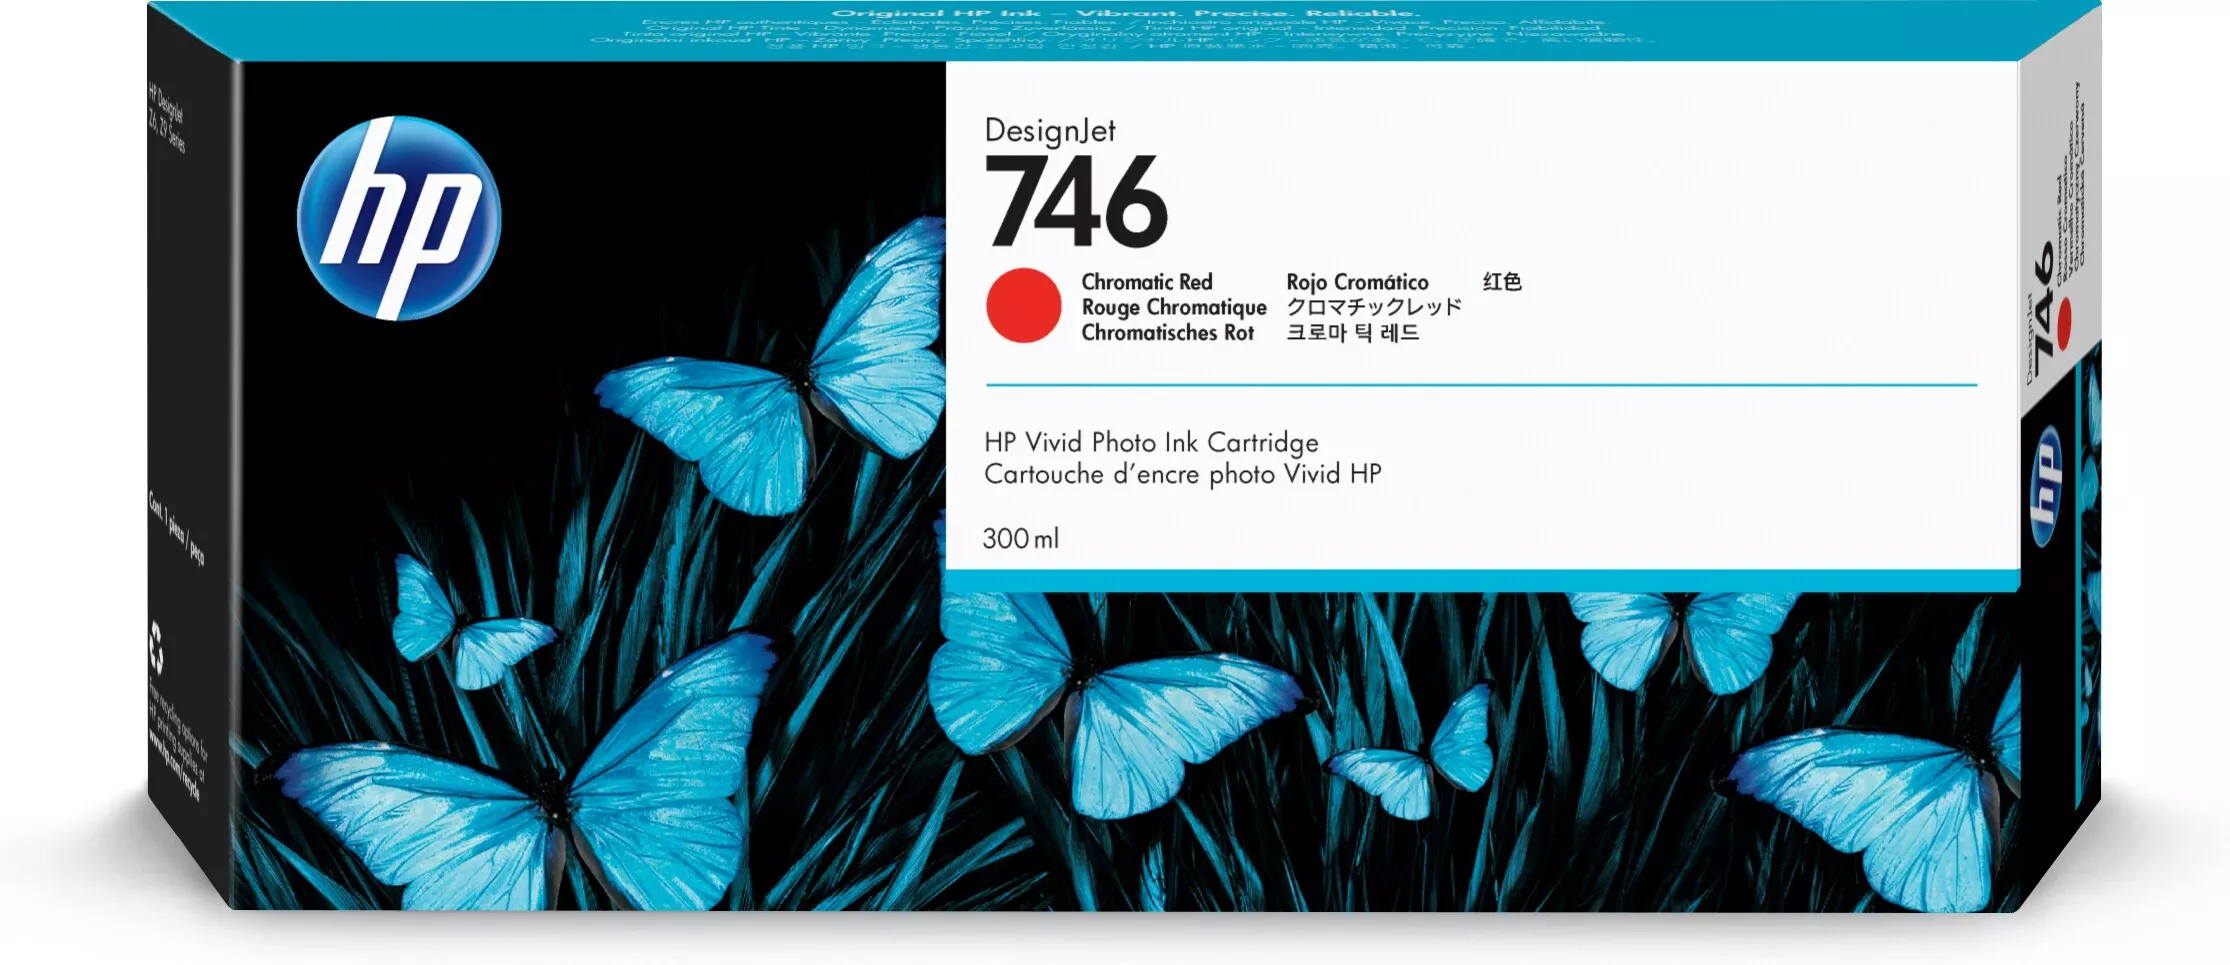 Vente HP 746 300-ml Chromatic Red Ink Cartridge HP au meilleur prix - visuel 2